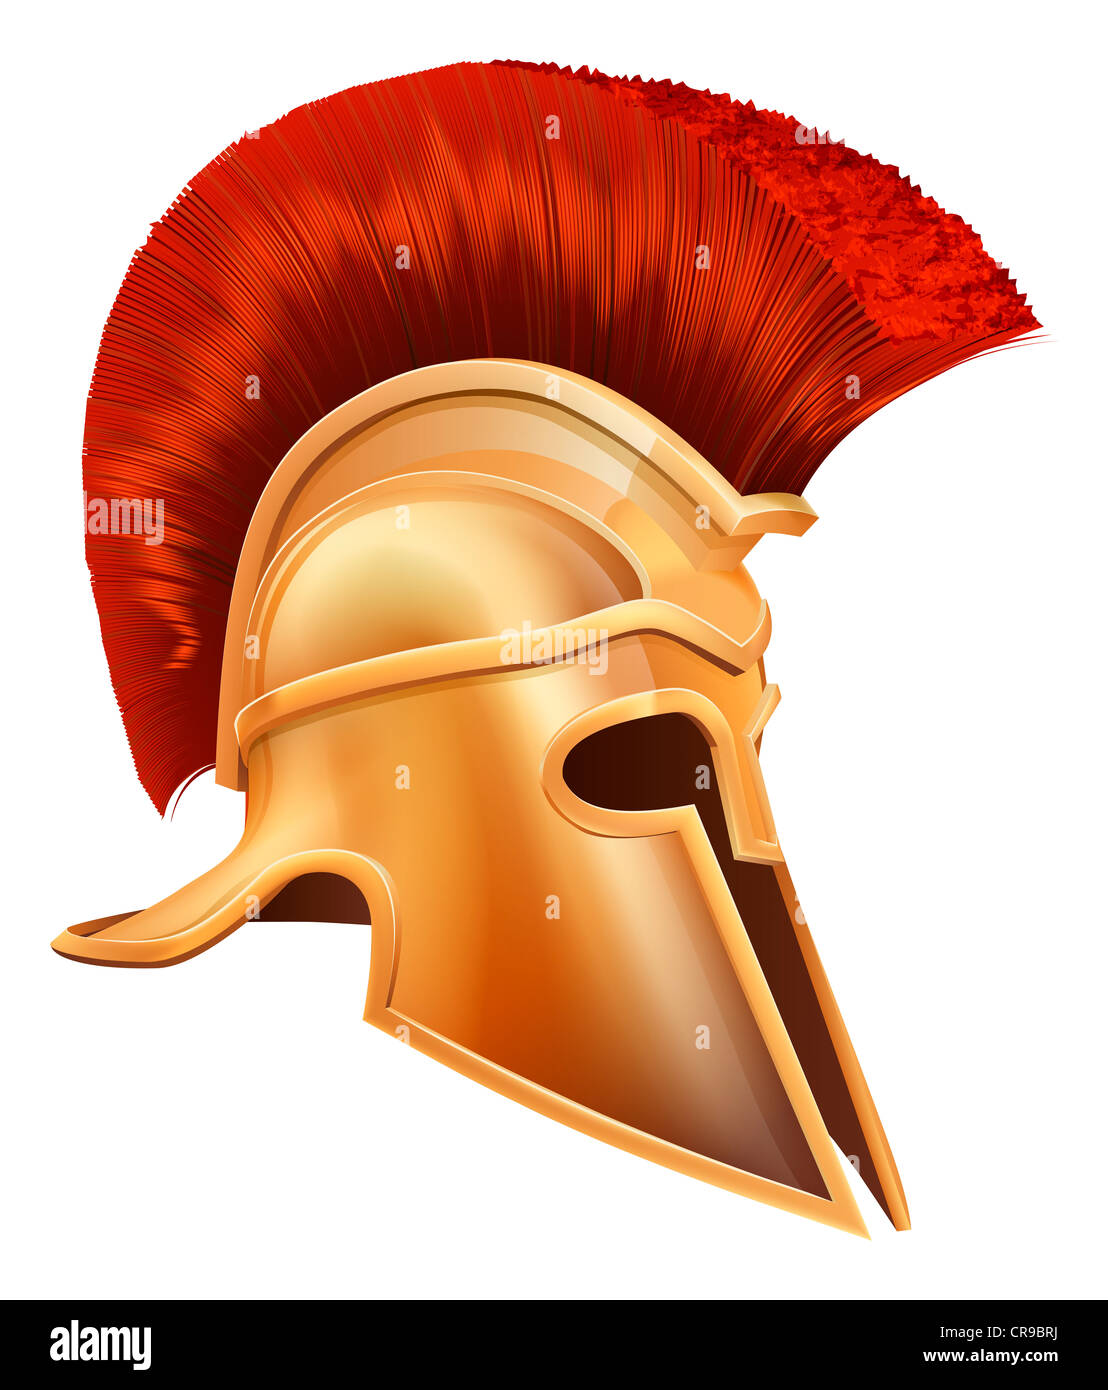 Illustration of an ancient Greek Warrior helmet, Spartan helmet, Roman helmet or Trojan helmet. Stock Photo